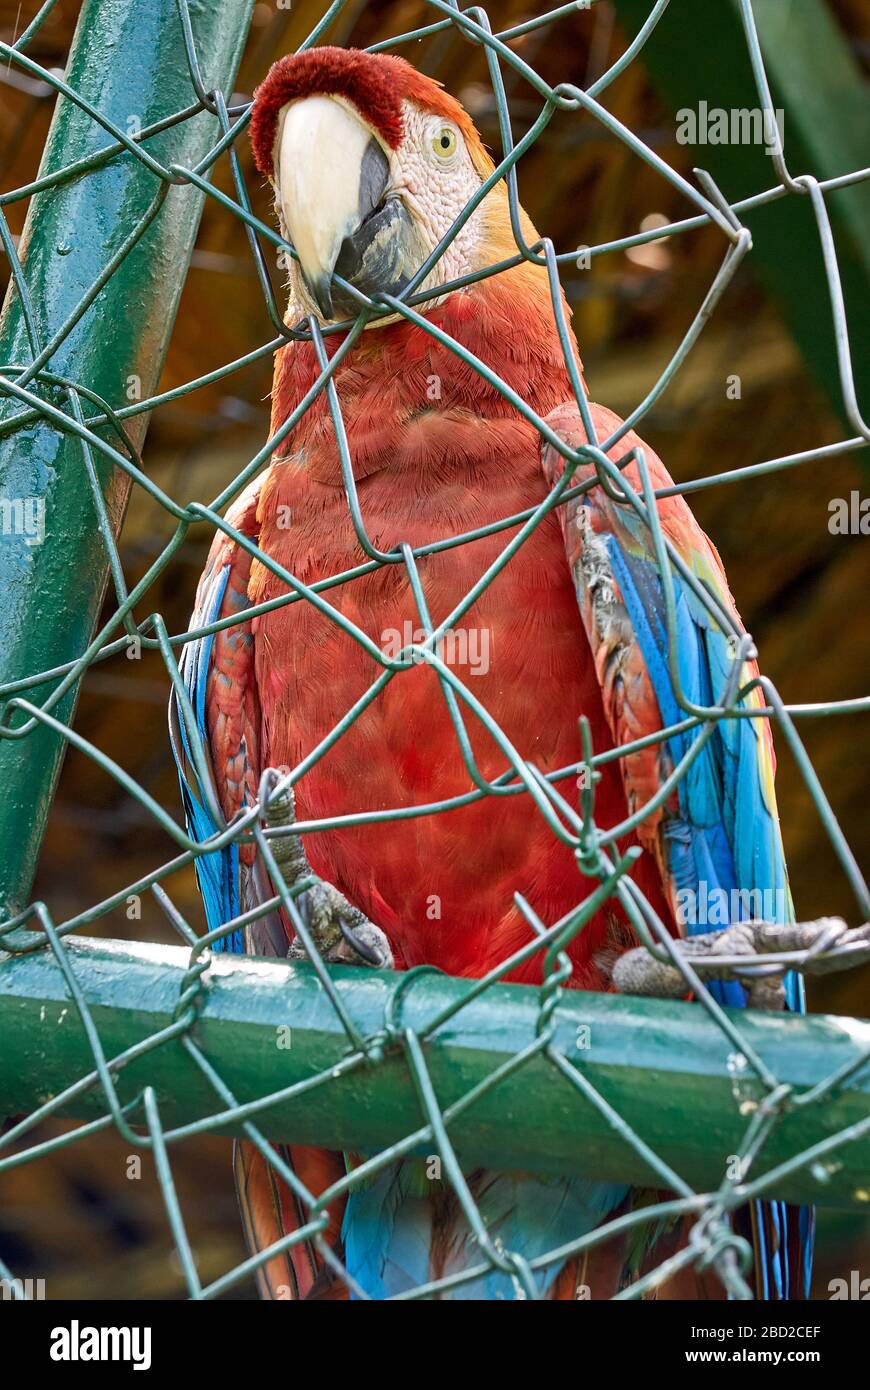 Macaw scarlatto in gabbia, crudeltà animale, ARA MACAO, CANAIMA, Venezuela, Sud America, America Foto Stock